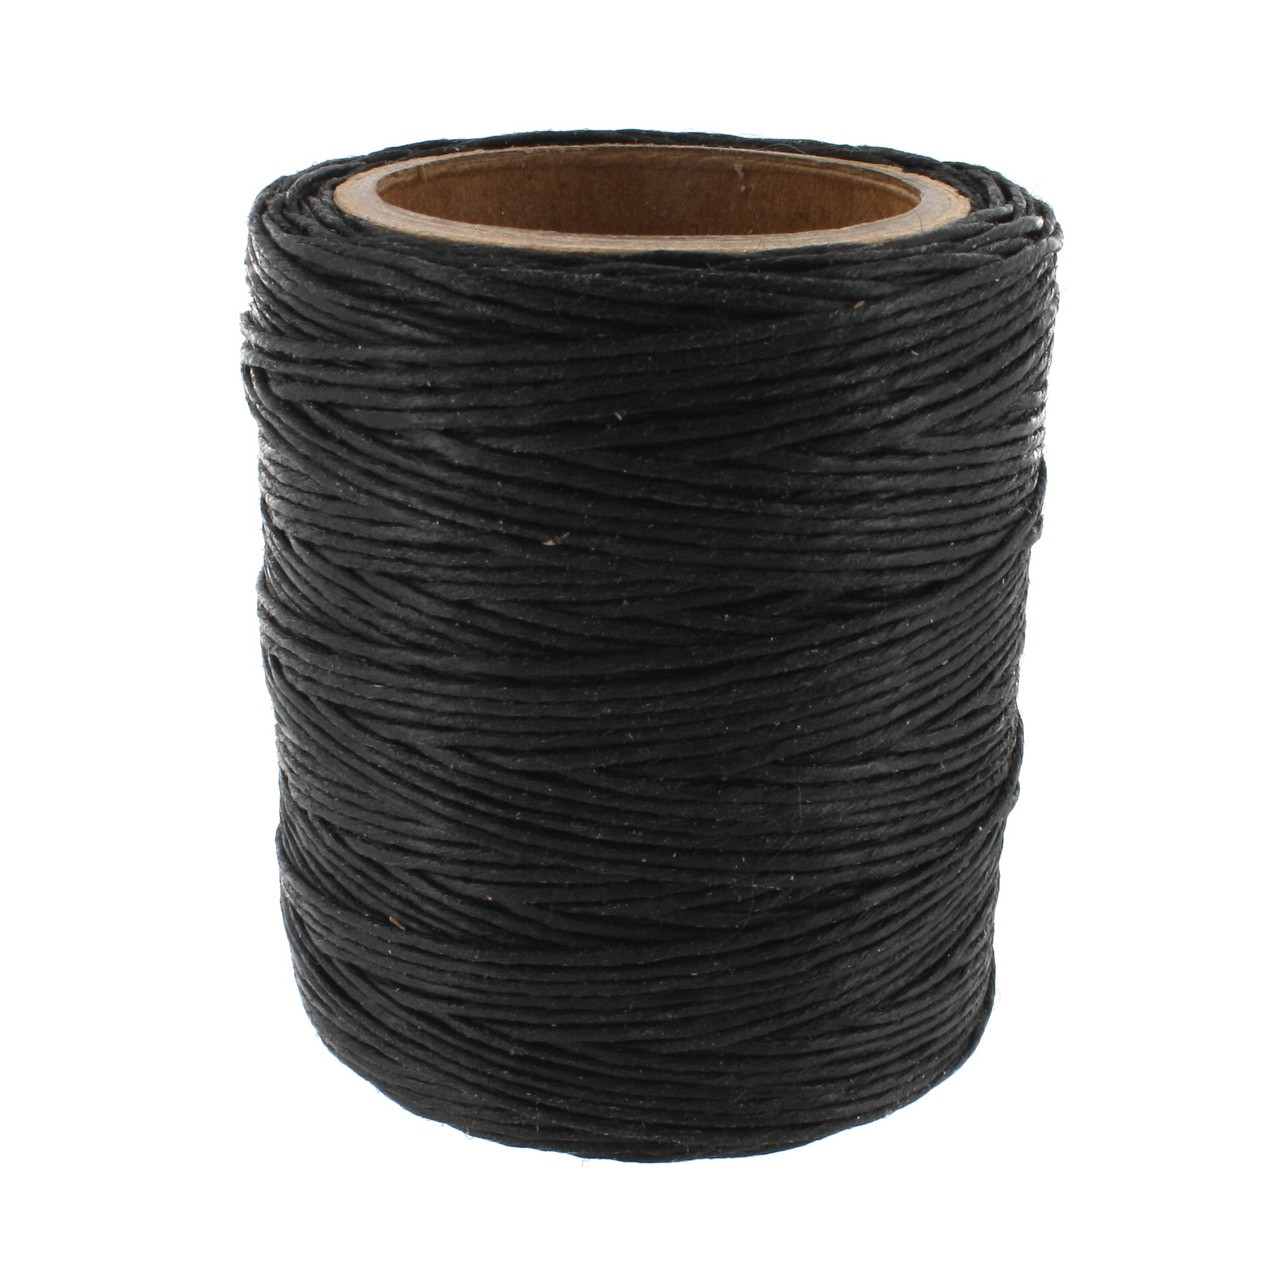 Maine Thread, Twisted Waxed Cord, 70 yard spool, Black 